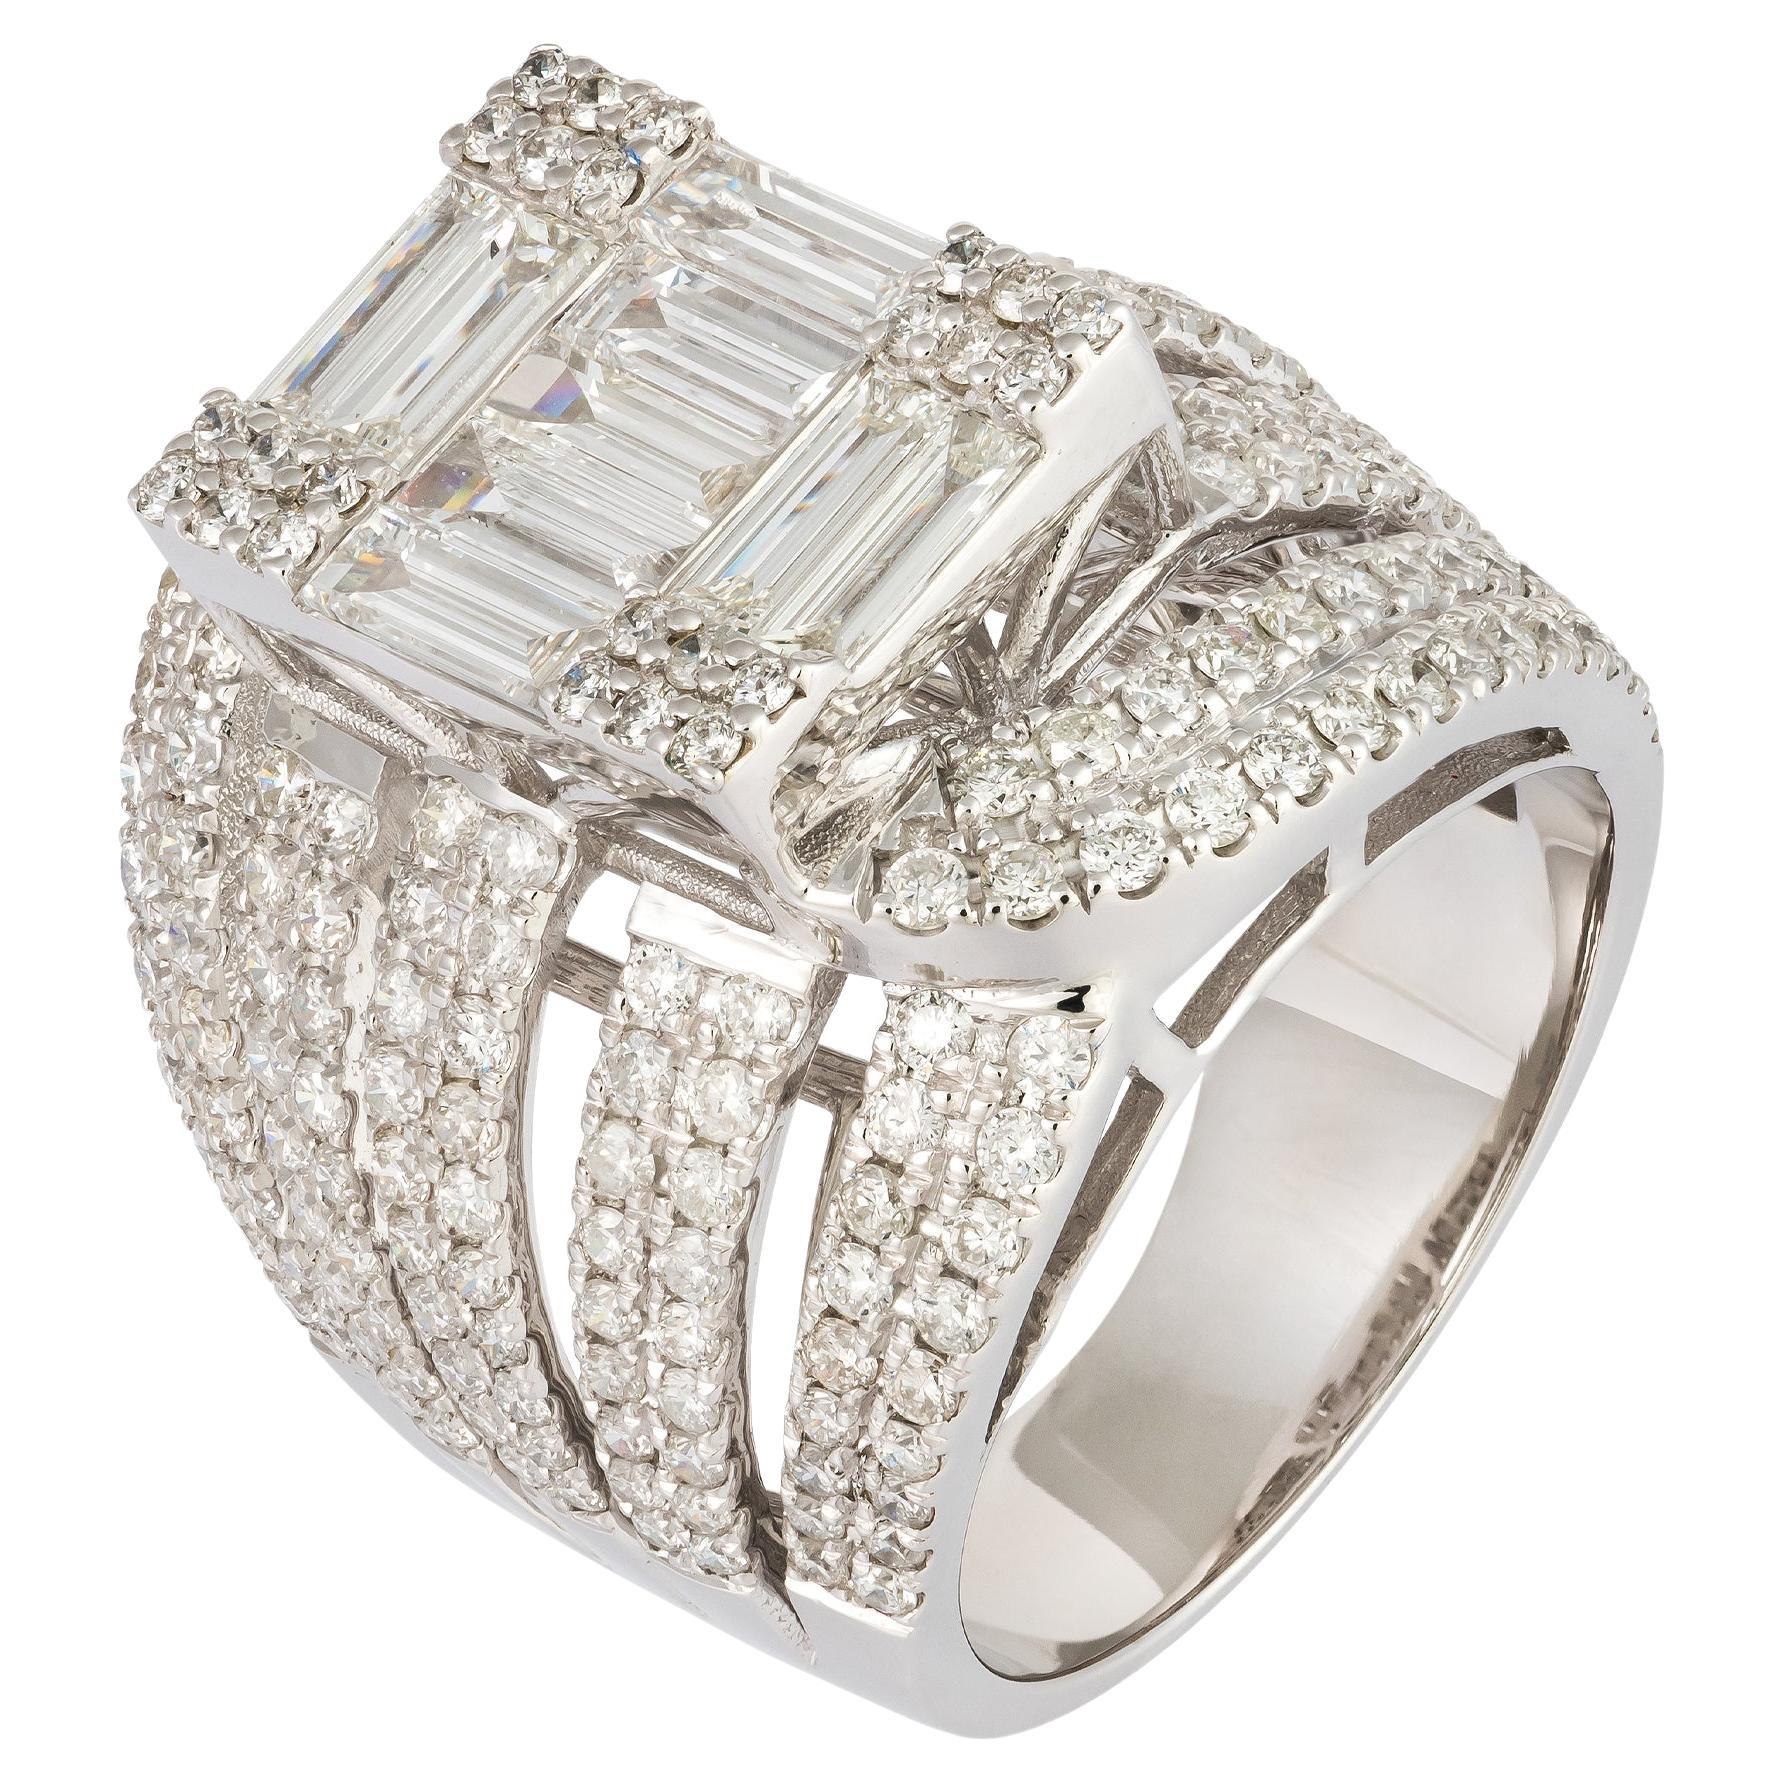 For Sale:  Unique White 18K Gold White Diamond Ring For Her